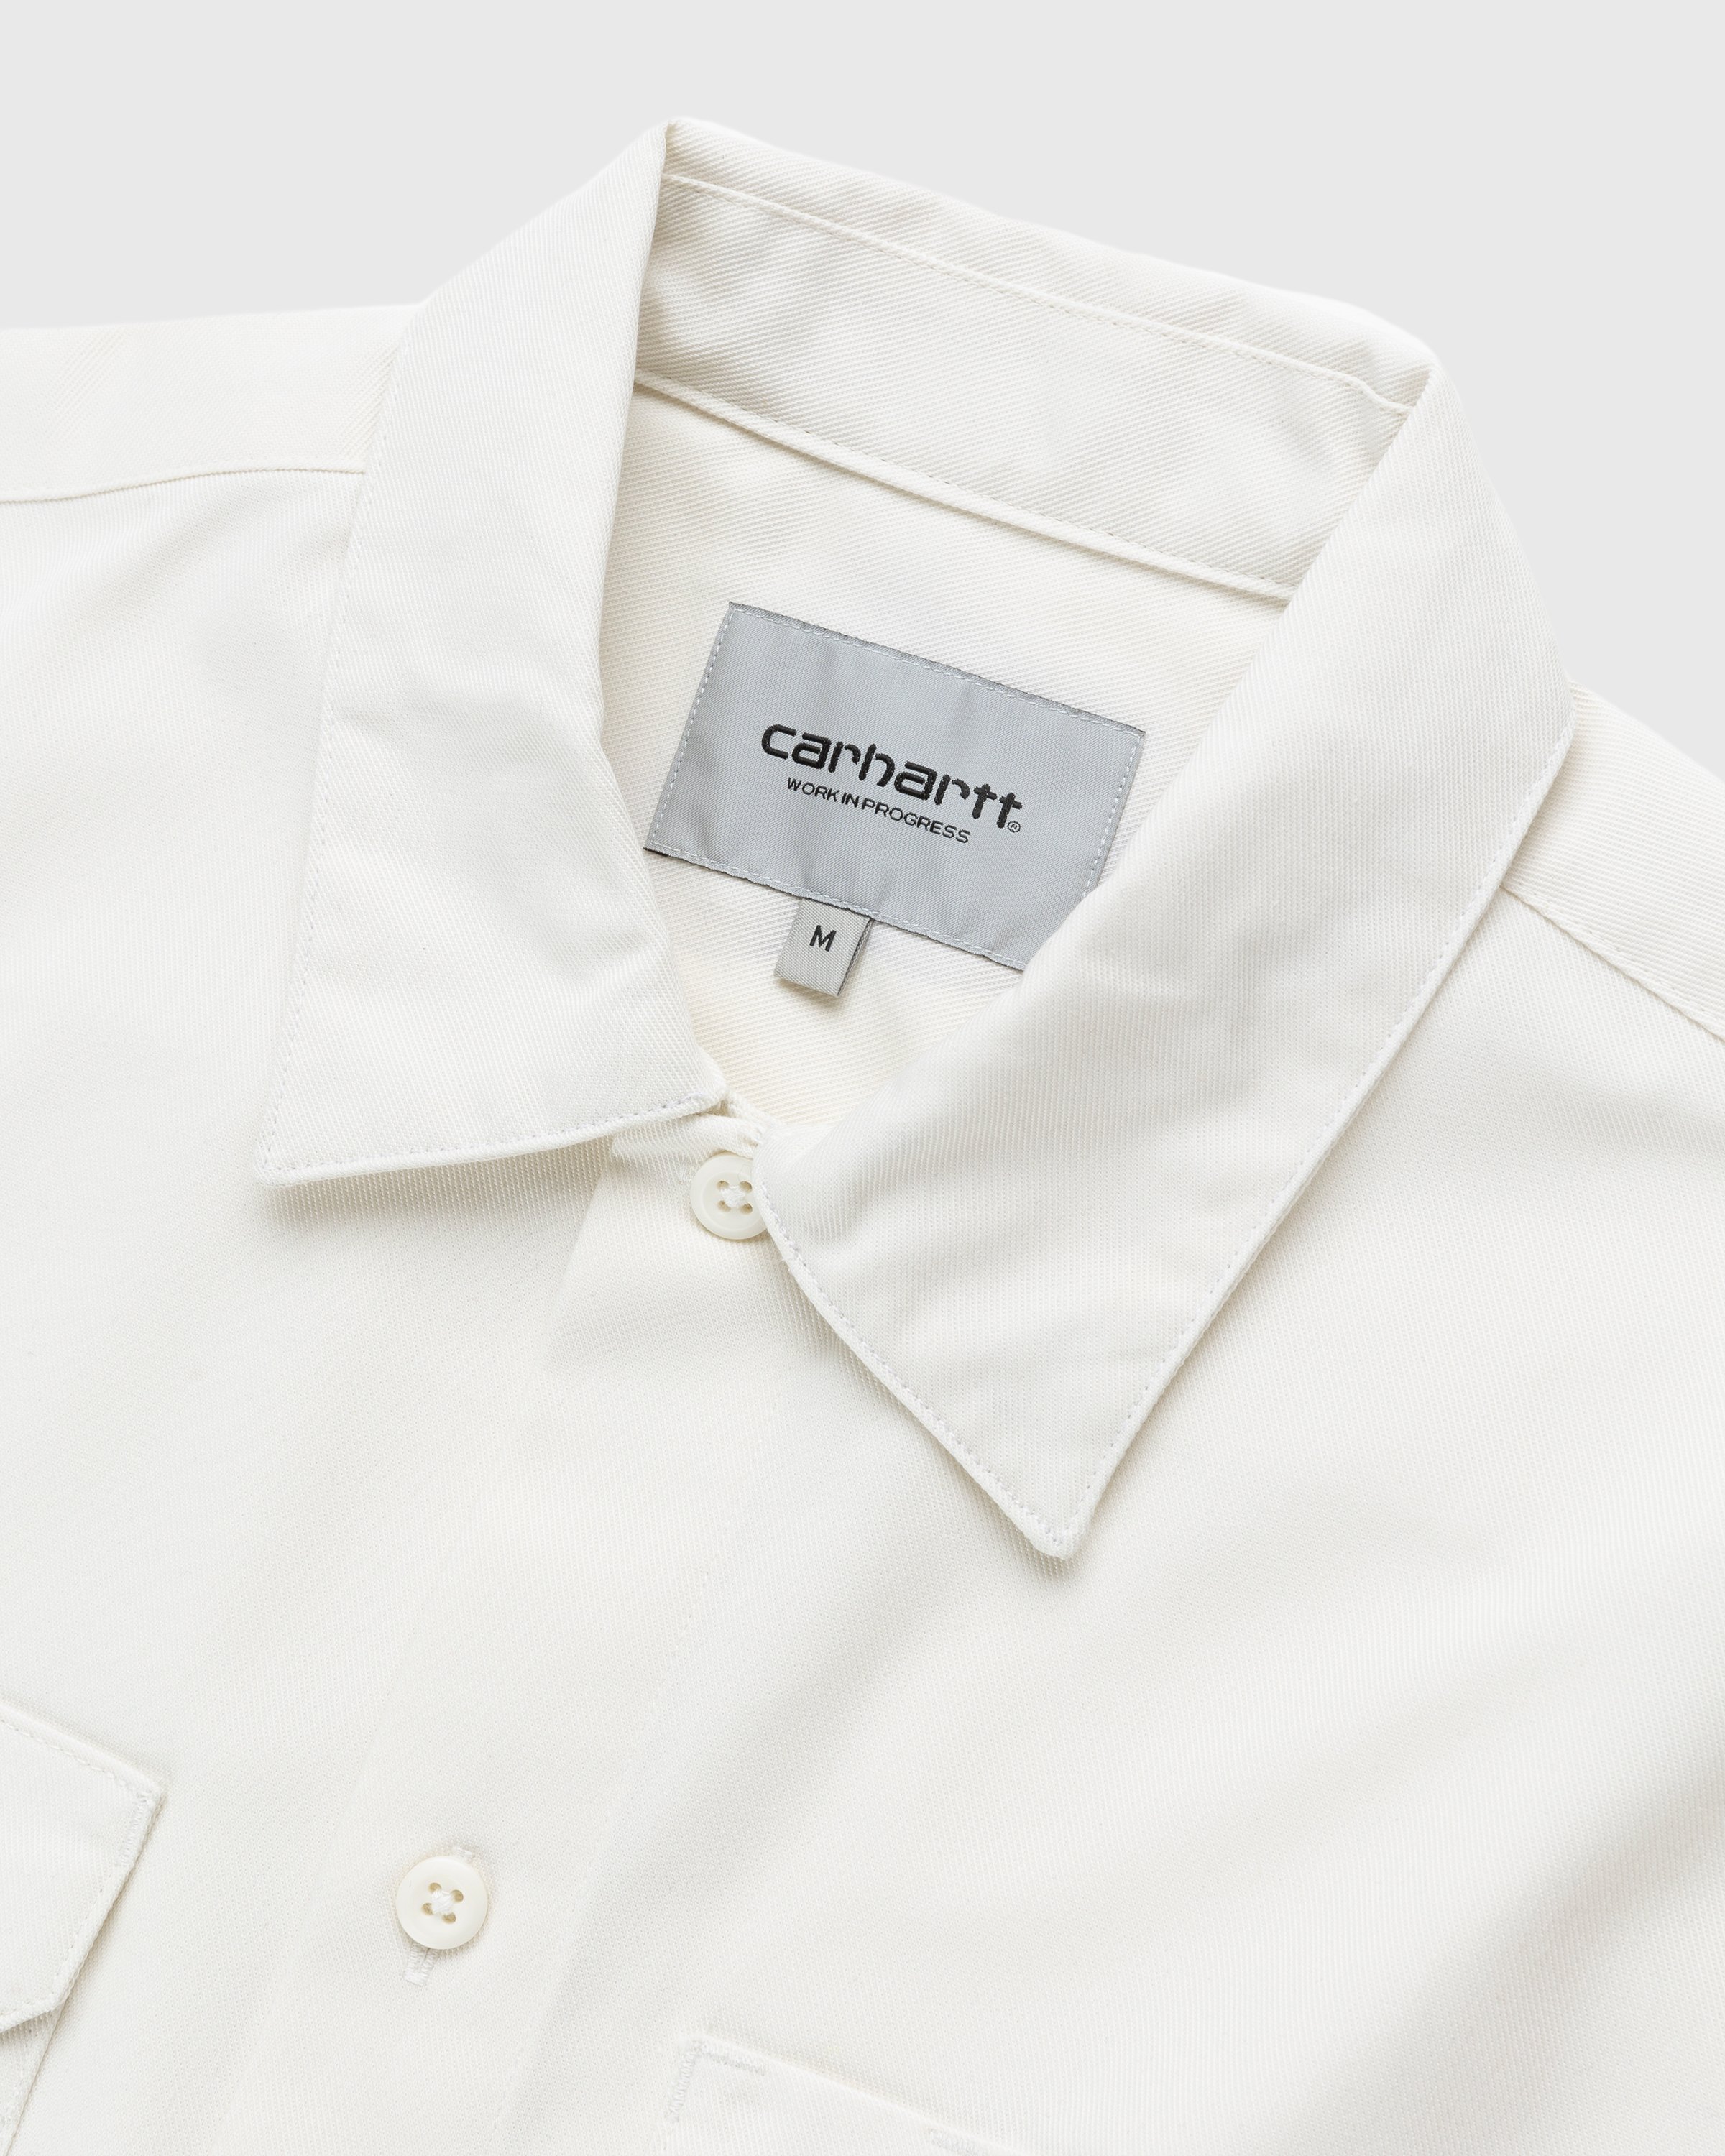 Carhartt WIP - Master Shirt Wax - Clothing - White - Image 5